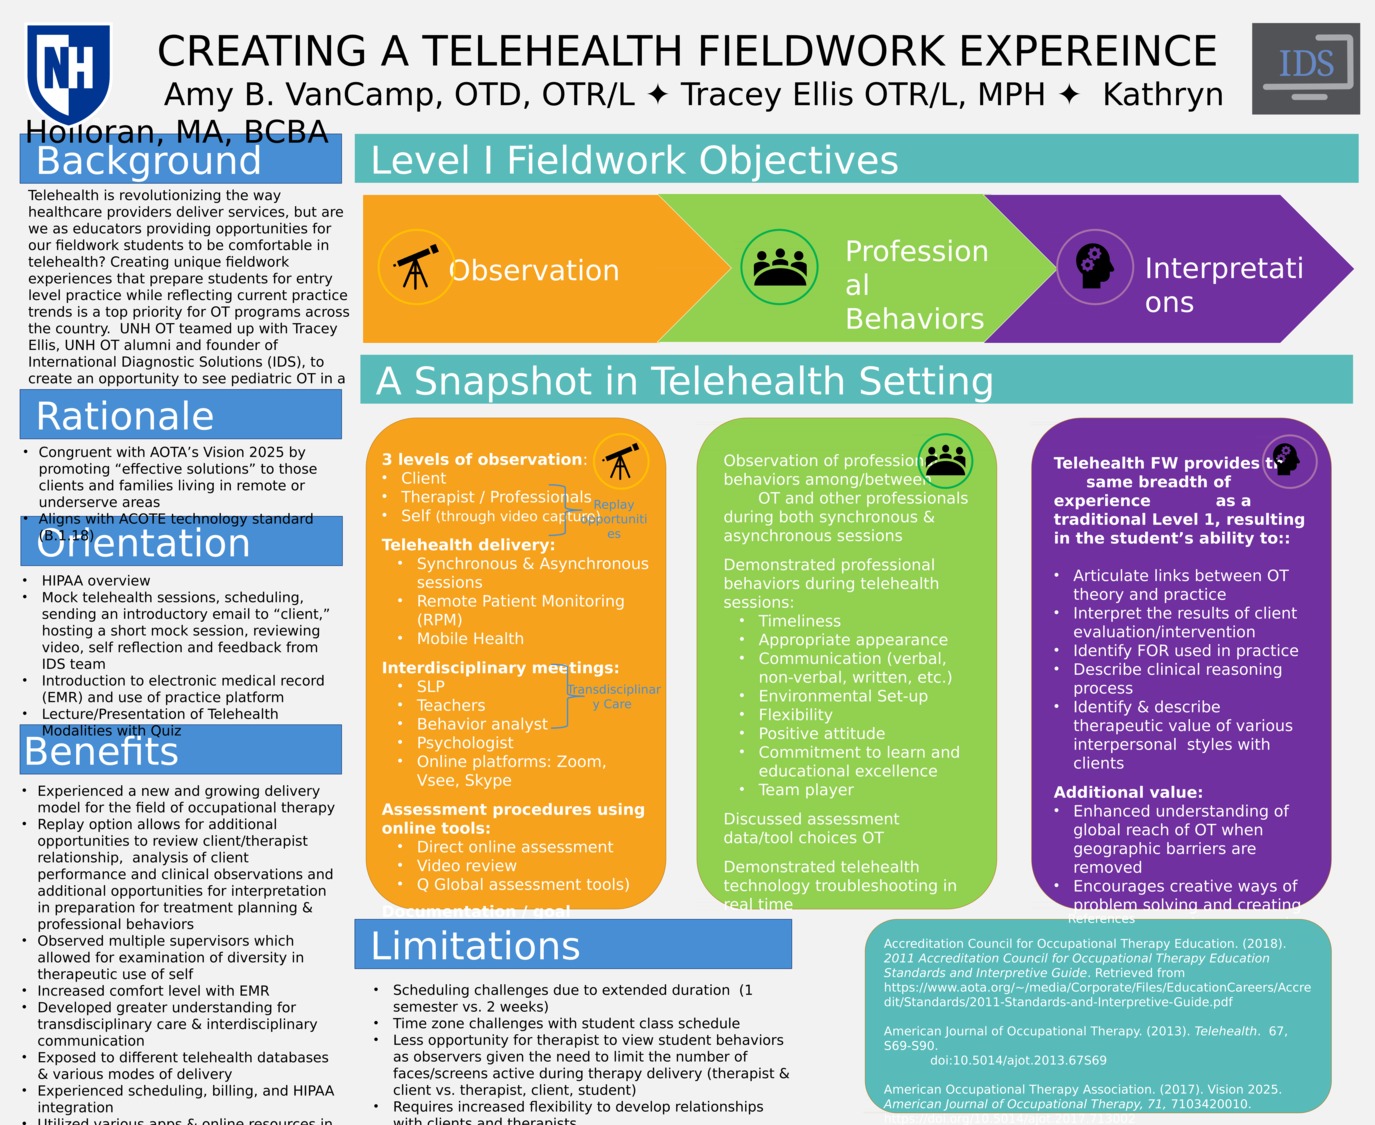 Creating A Telehealth Fieldwork Experience by abv2003